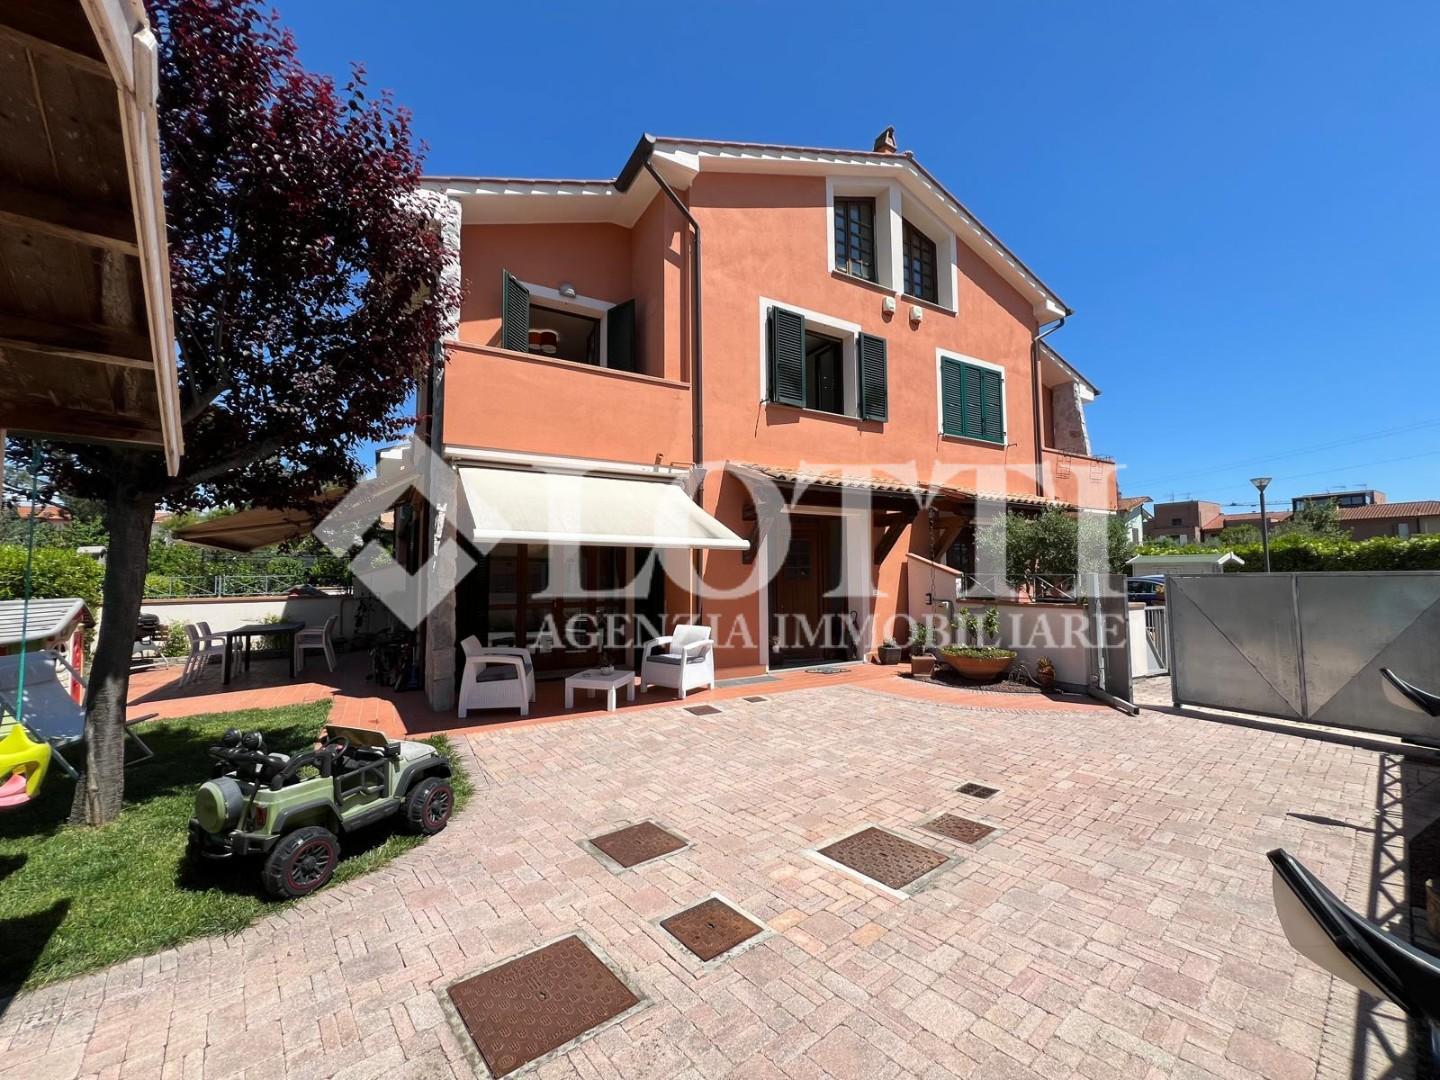 Terraced house for sale in Oltrarno, Calcinaia (PI)